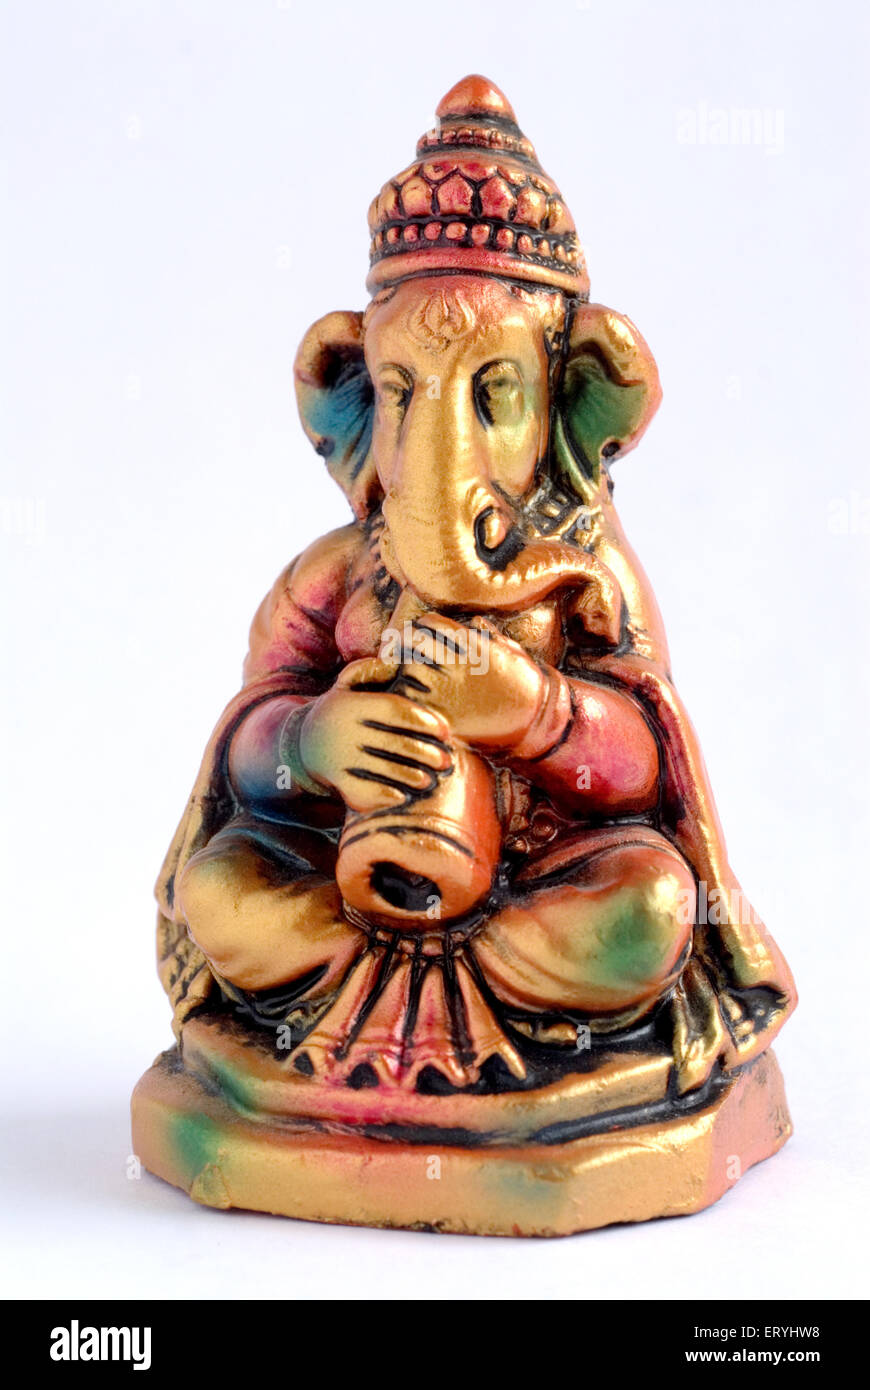 Colourful statue of lord Ganesha elephant headed god playing tutari Trumpet; India Stock Photo